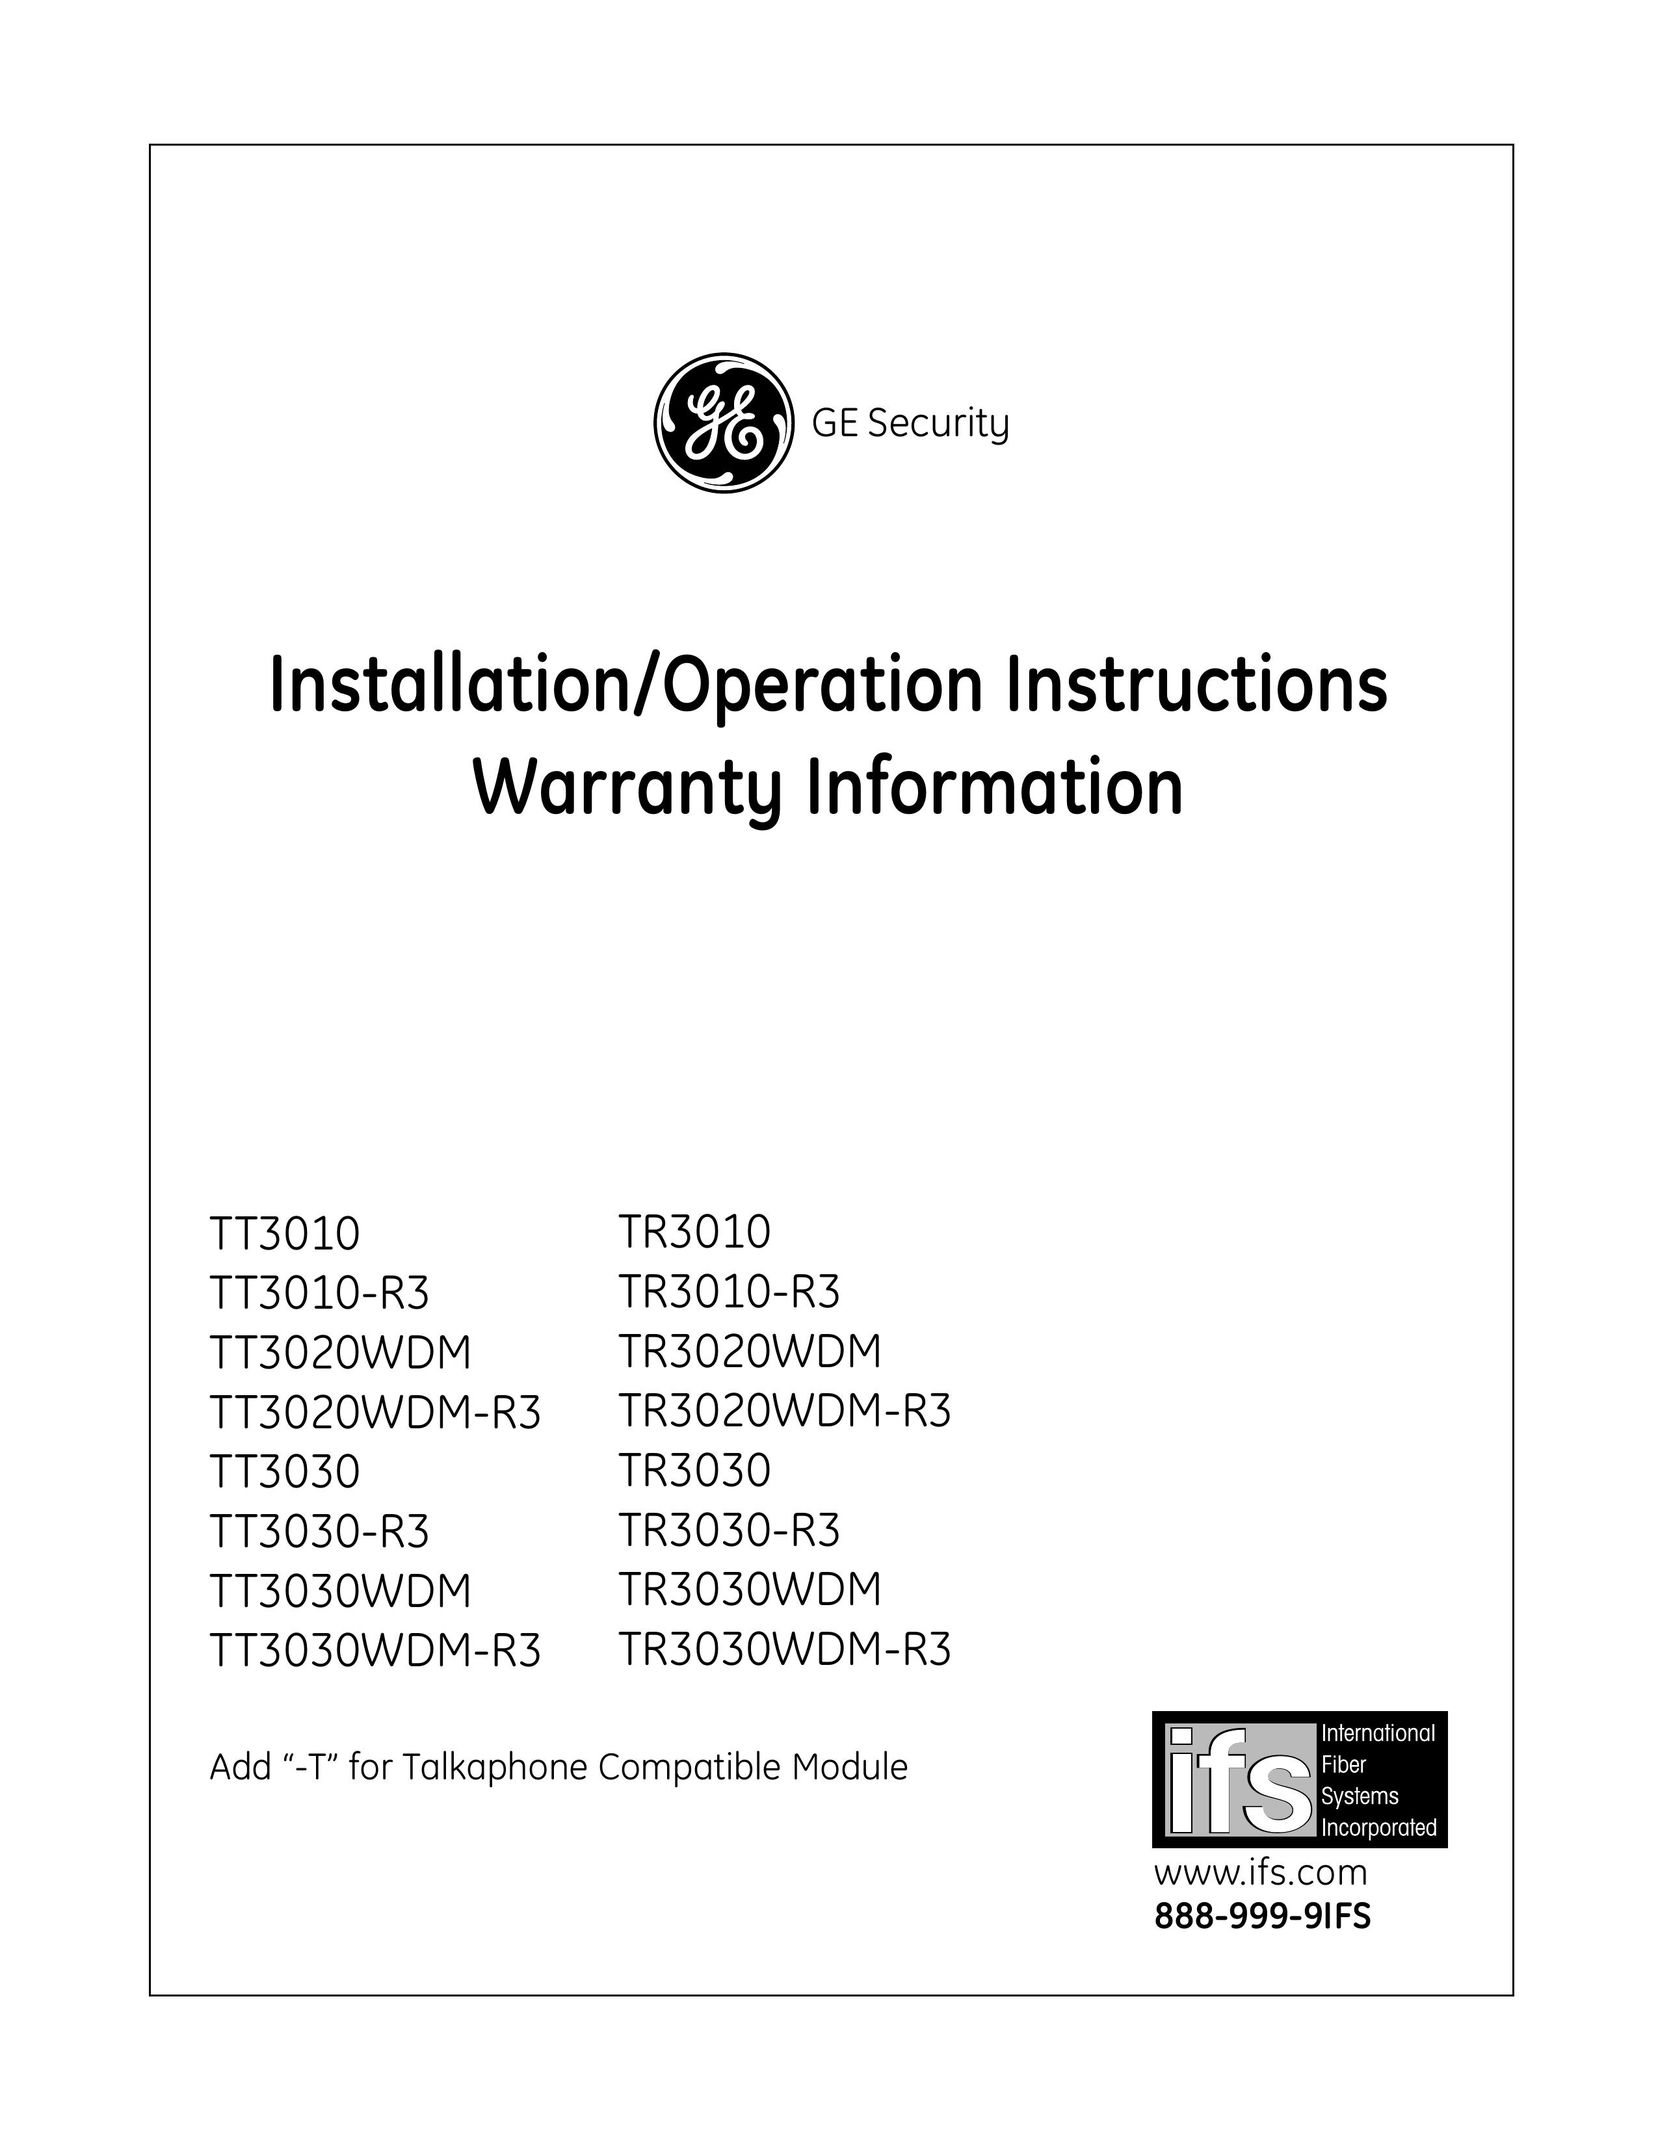 GE TT3030WDM-R3 Telephone Accessories User Manual